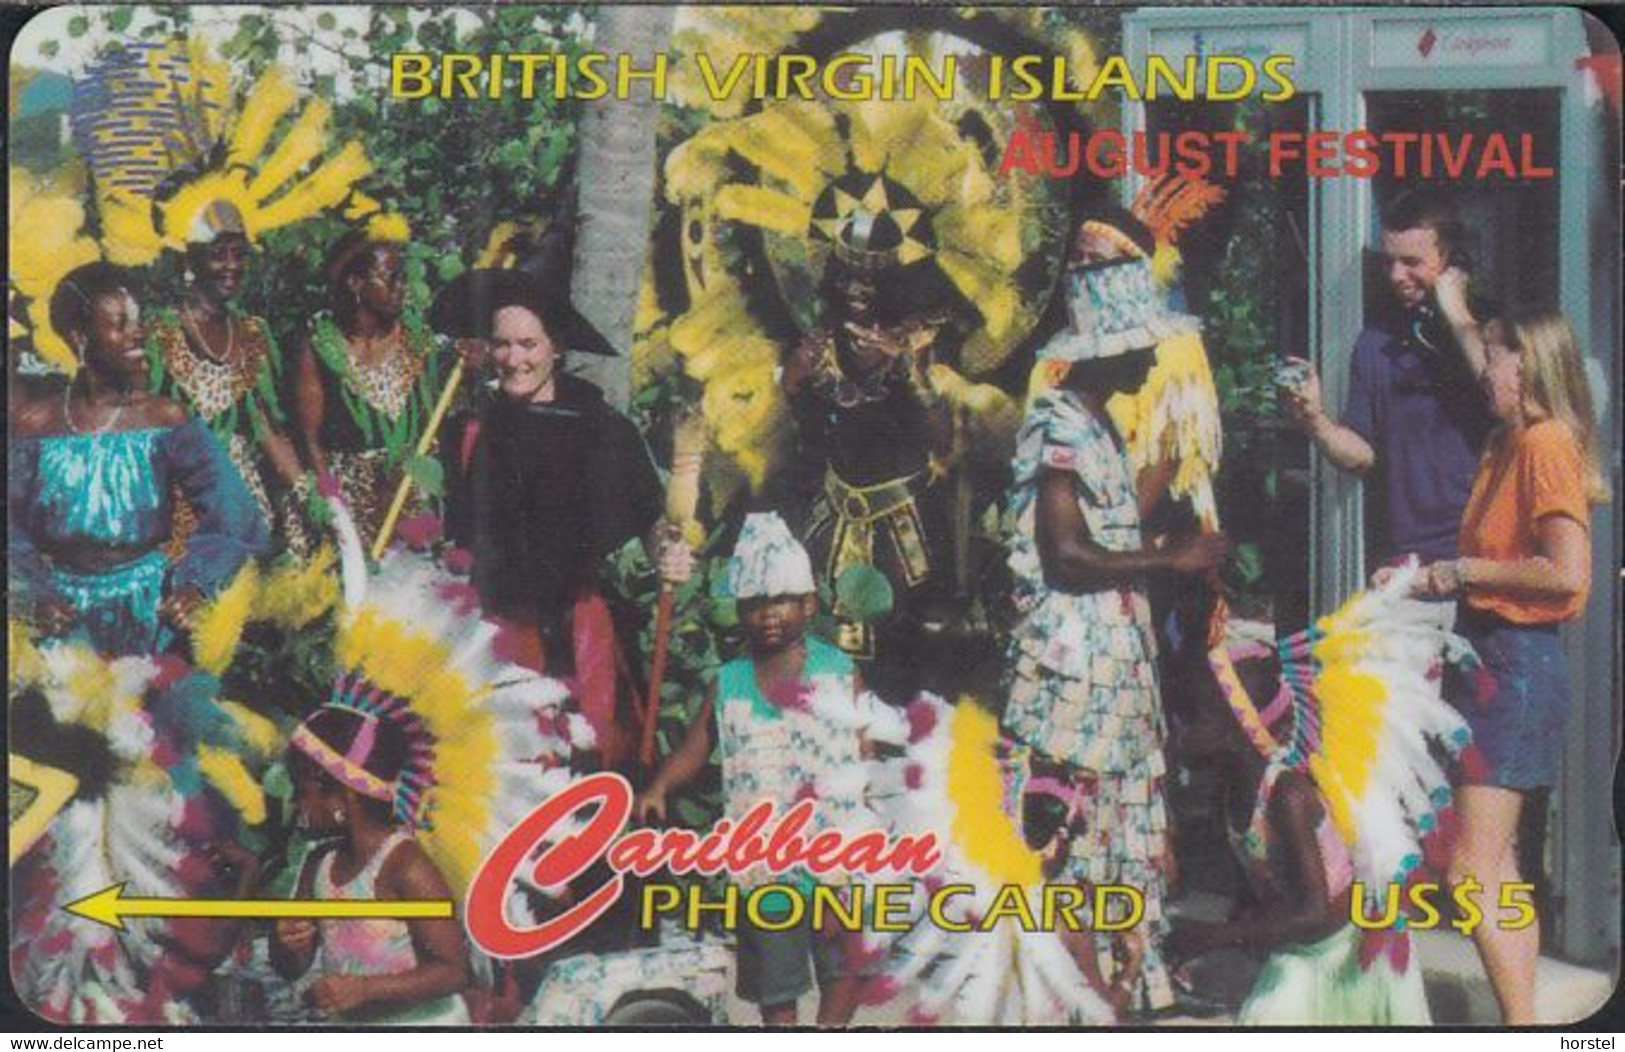 British Virgin Islands - BVI-143G - August Festival S.T. - 143CBVG US$5 - Antilles (Other)